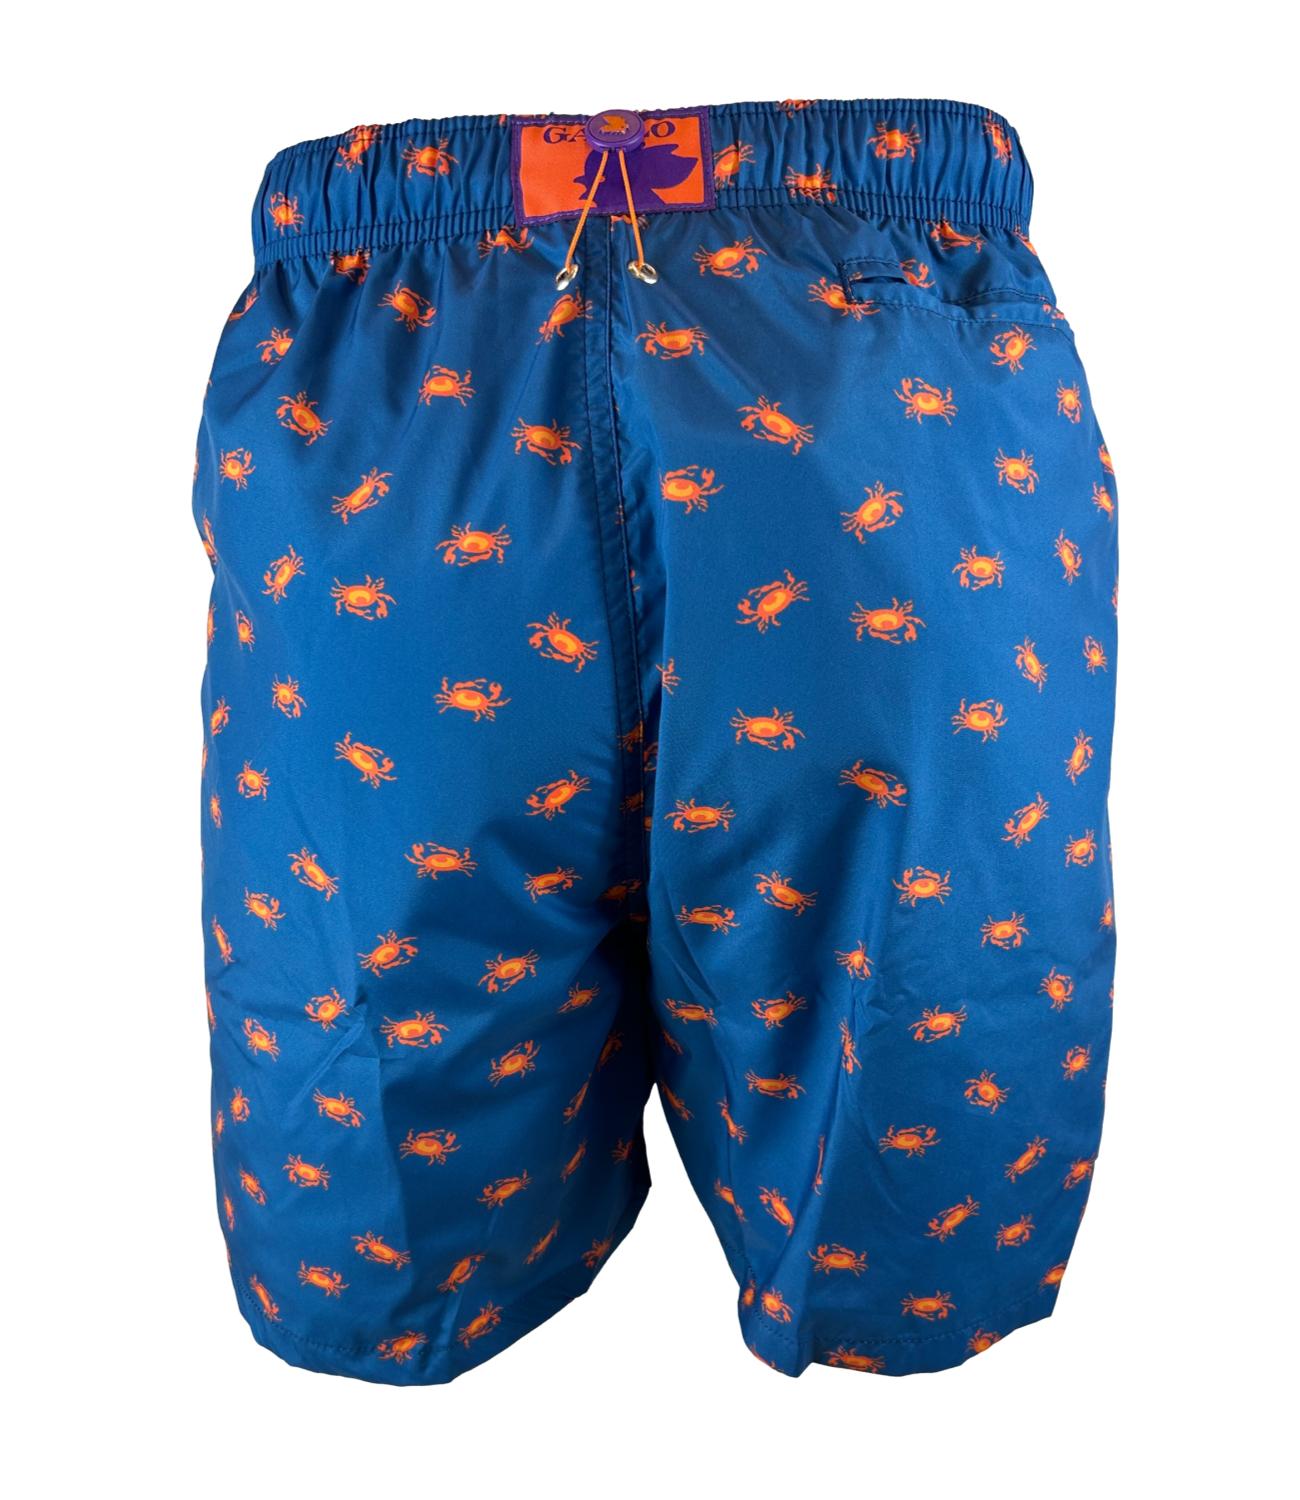 GALLO Men's Blue Costume with orange crab pattern